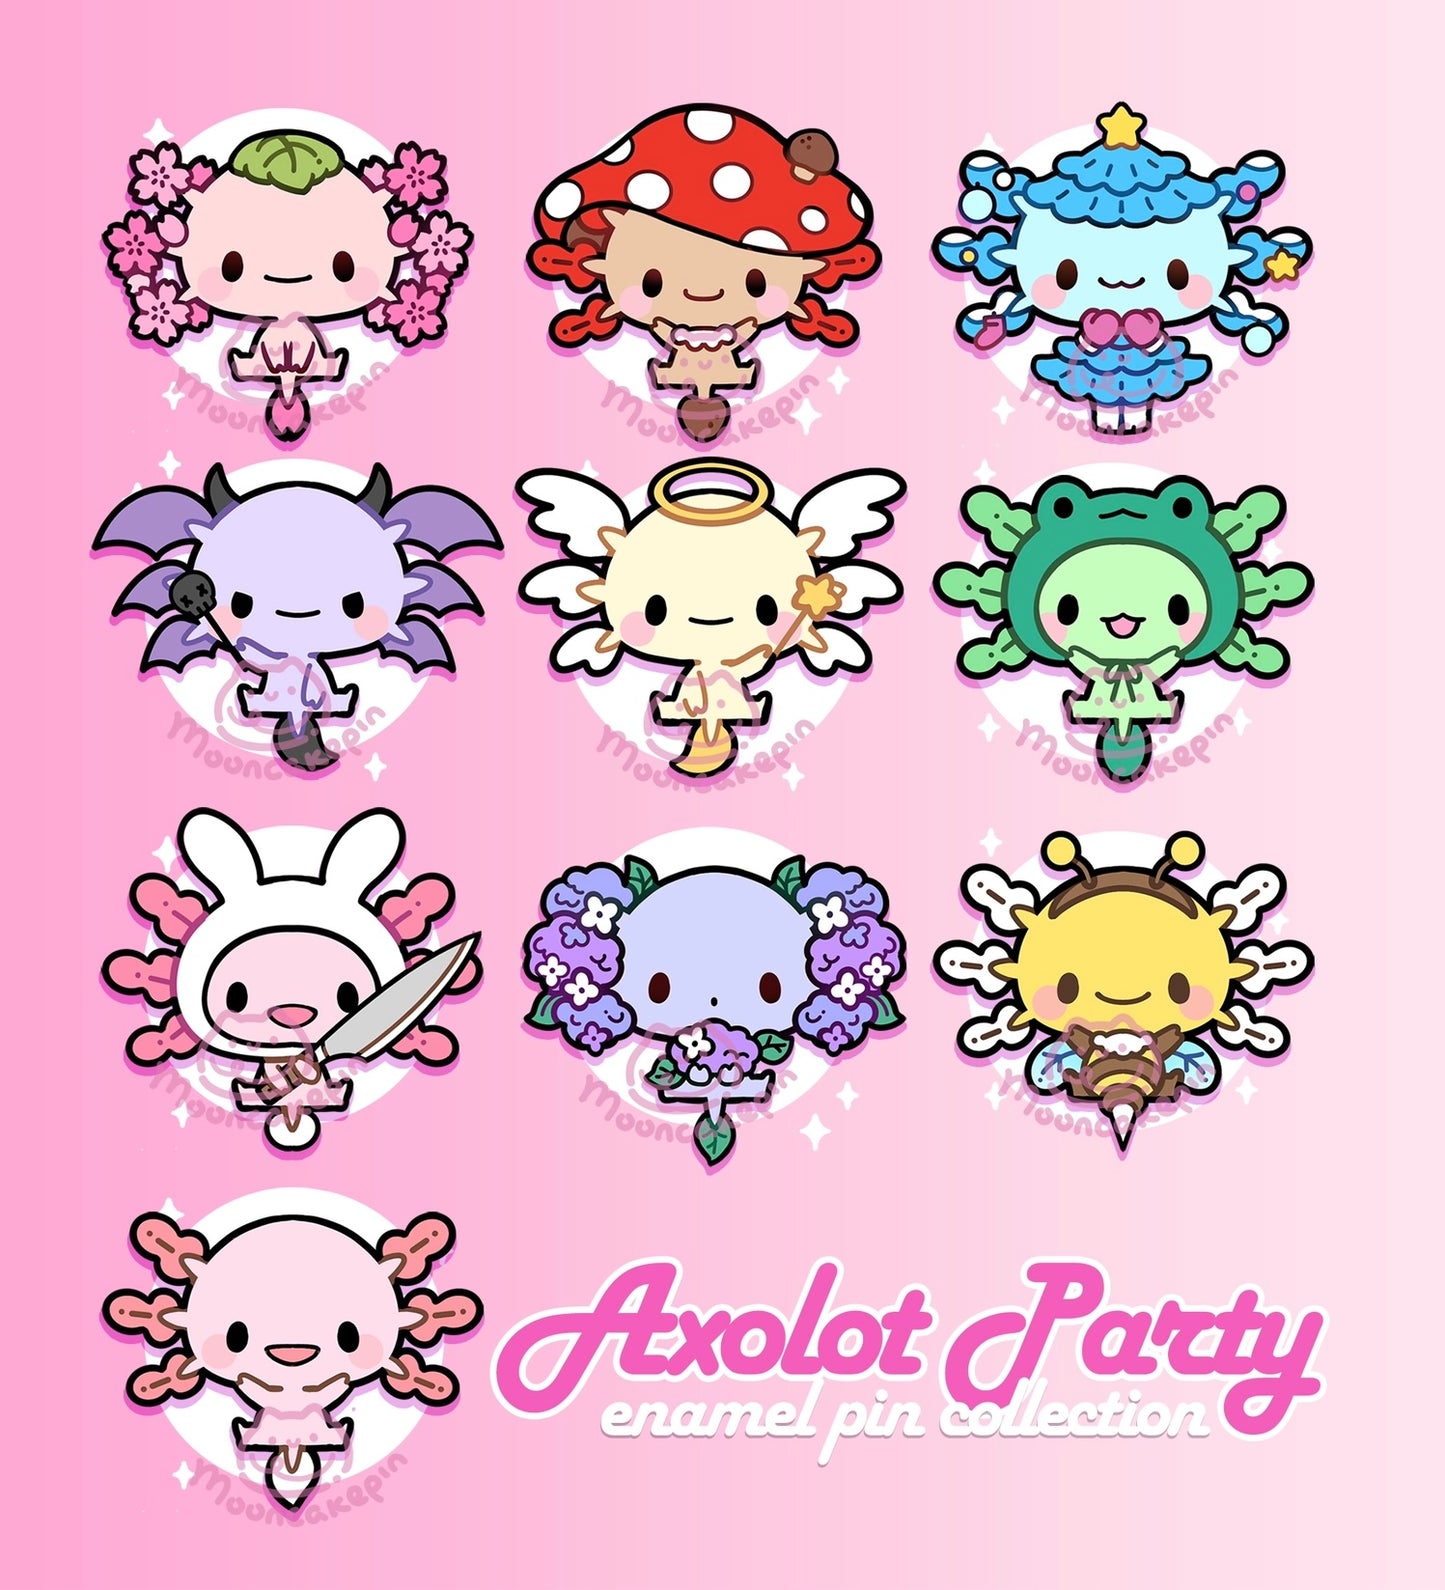 Axolotl Party! Enamel Pin Surprise Blindbag by Mooncake Pin